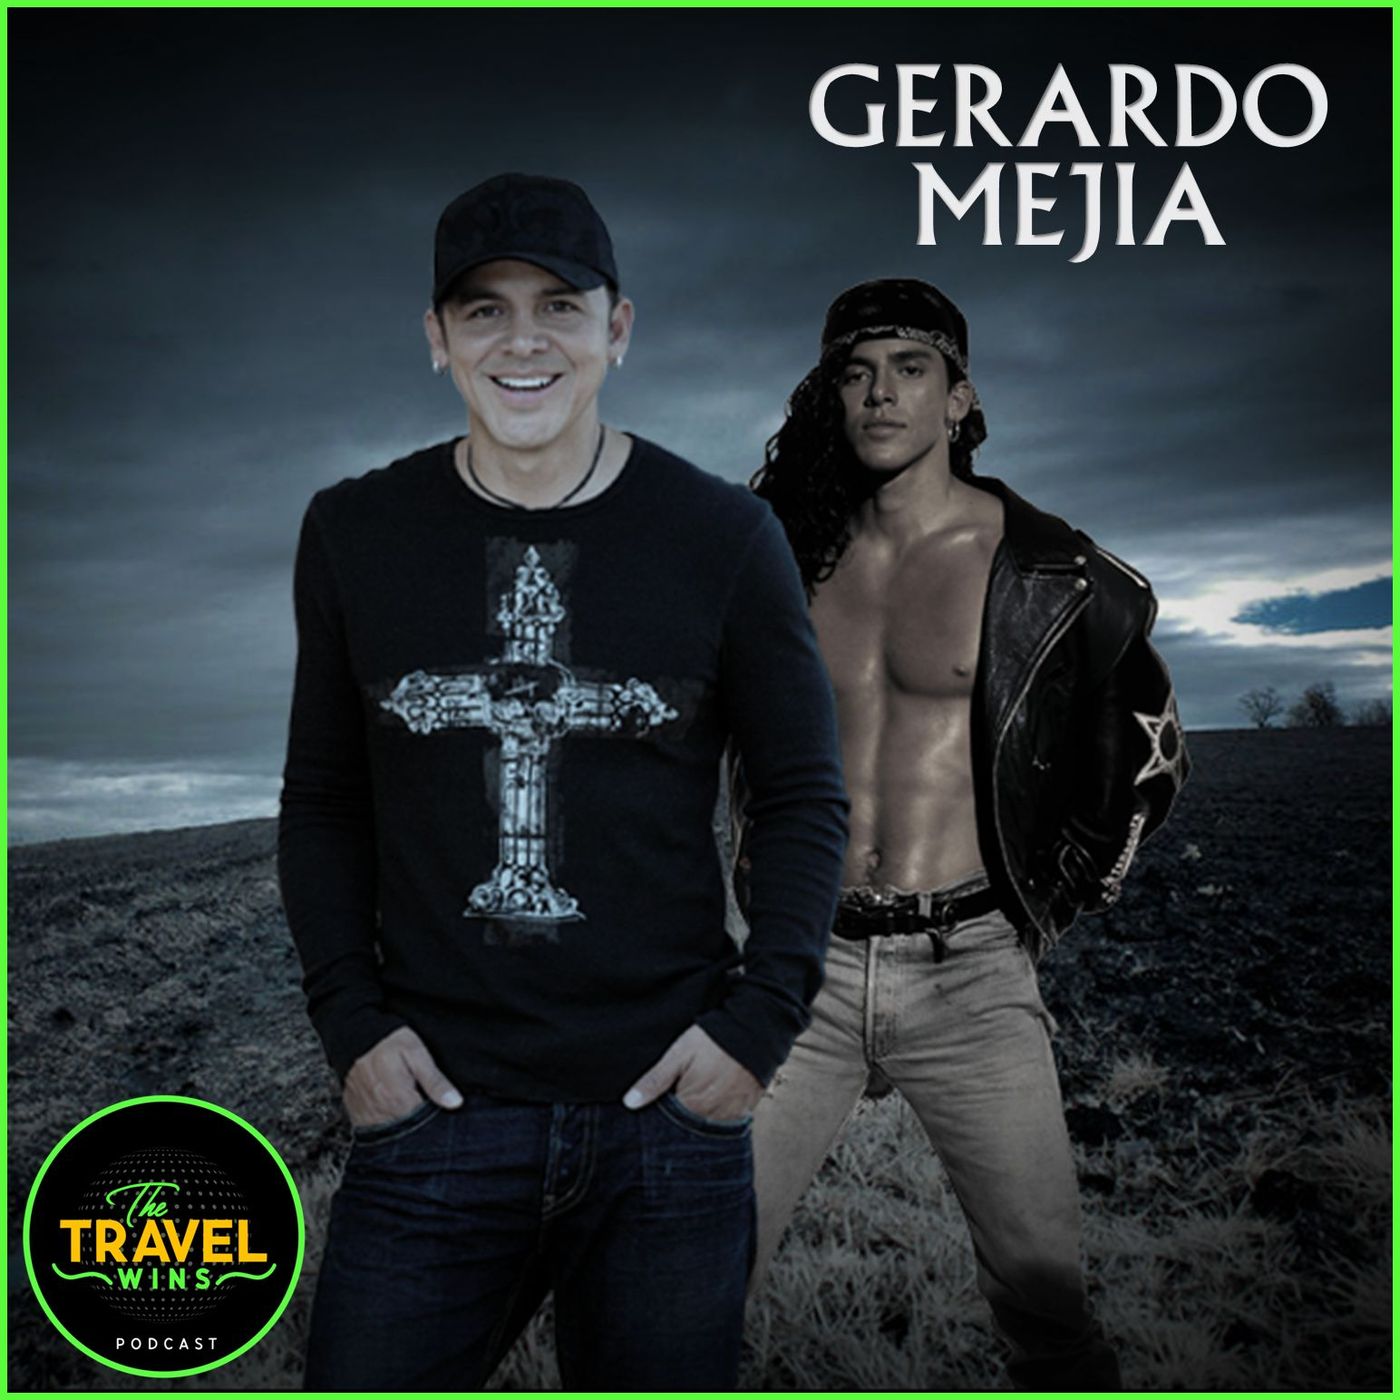 Gerardo Mejia rico suave in business and family